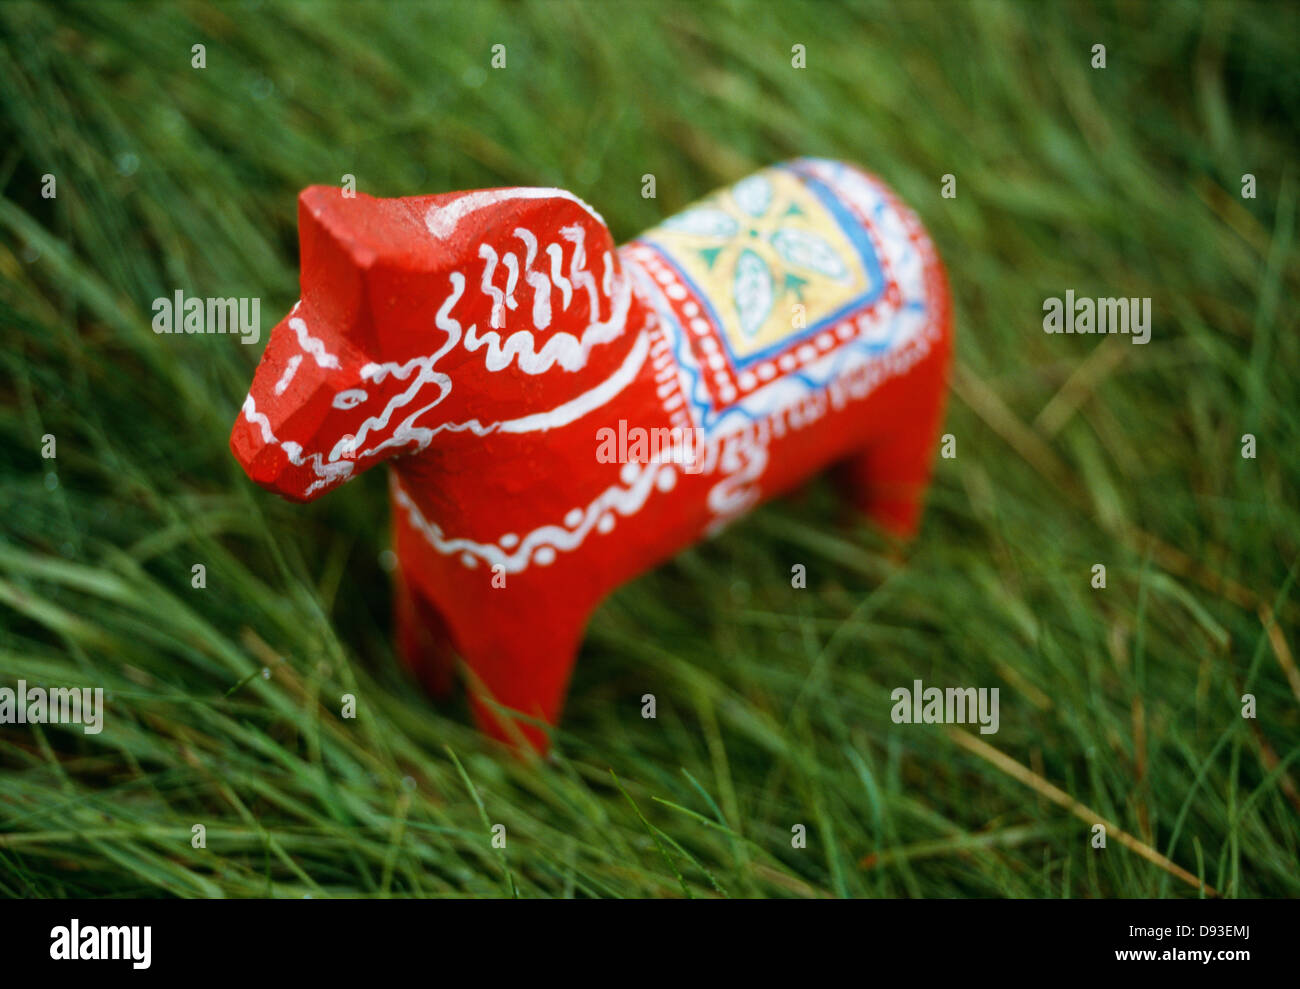 Dalecarlian horse on grass, close-up Stock Photo